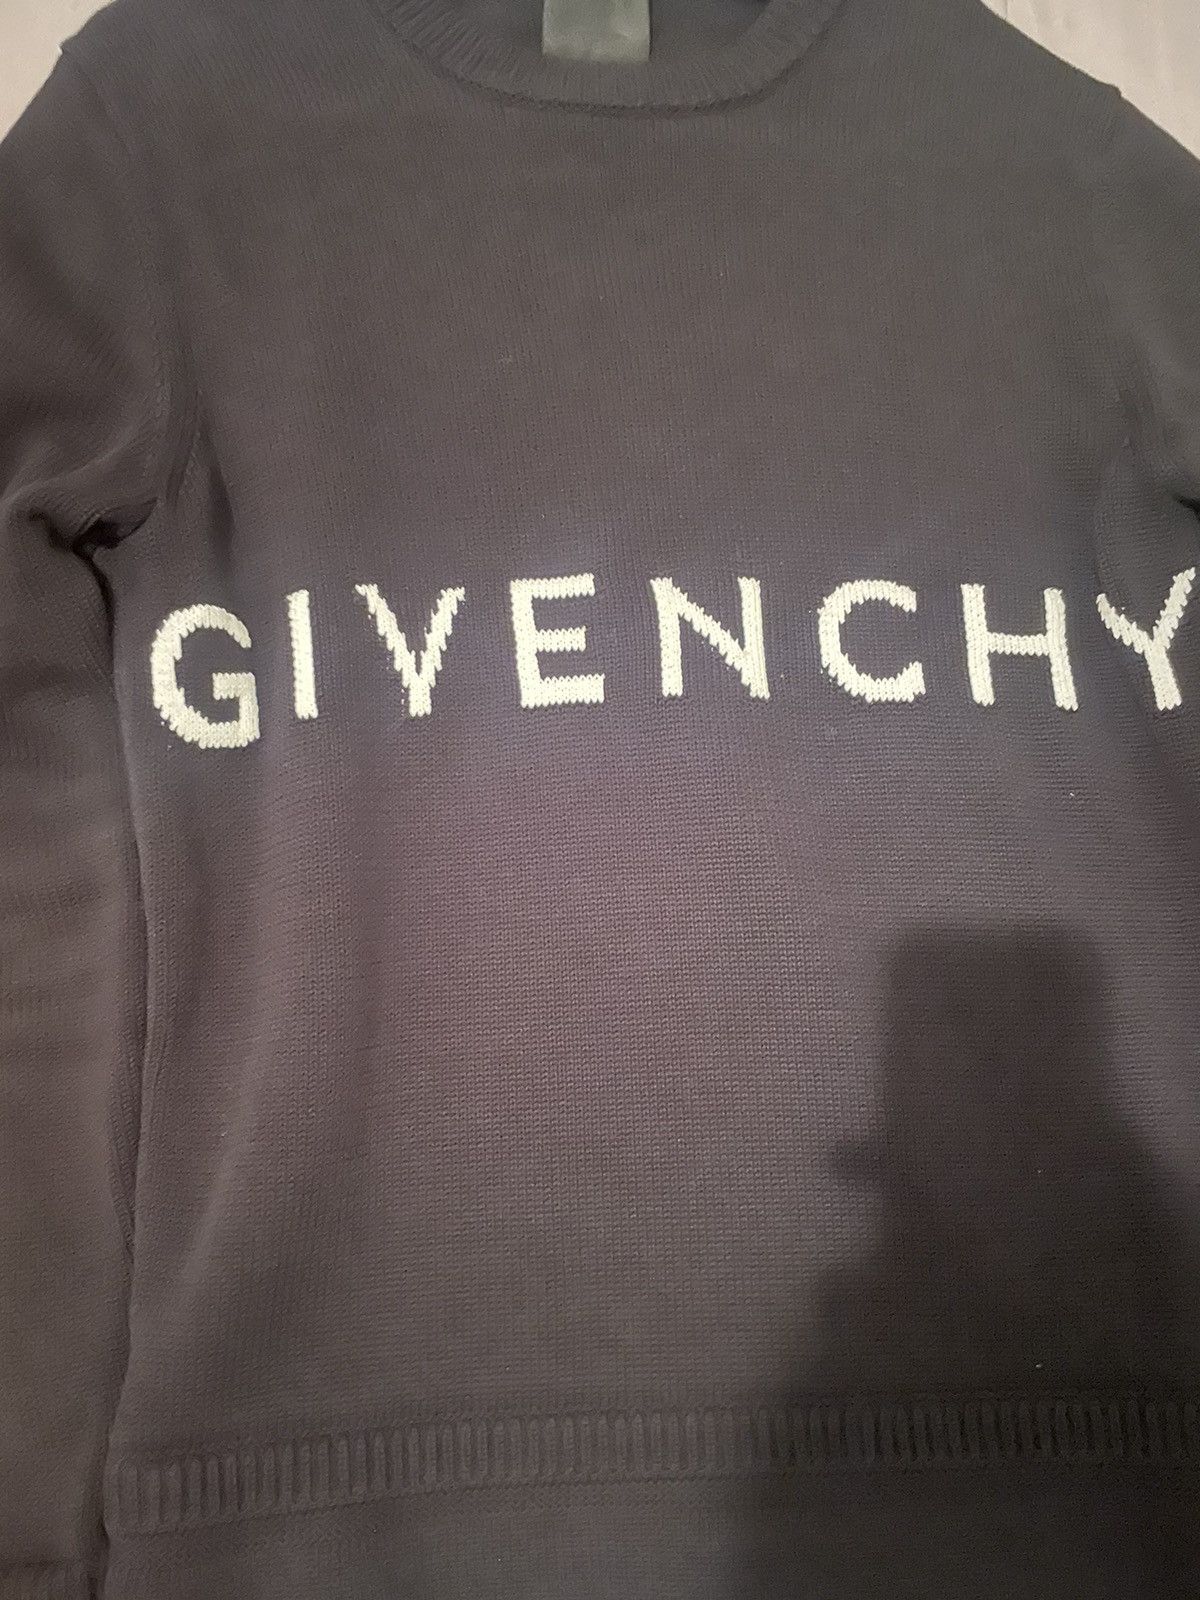 Givenchy 4g logo-intarsia cotton sweater Size US M / EU 48-50 / 2 - 2 Preview